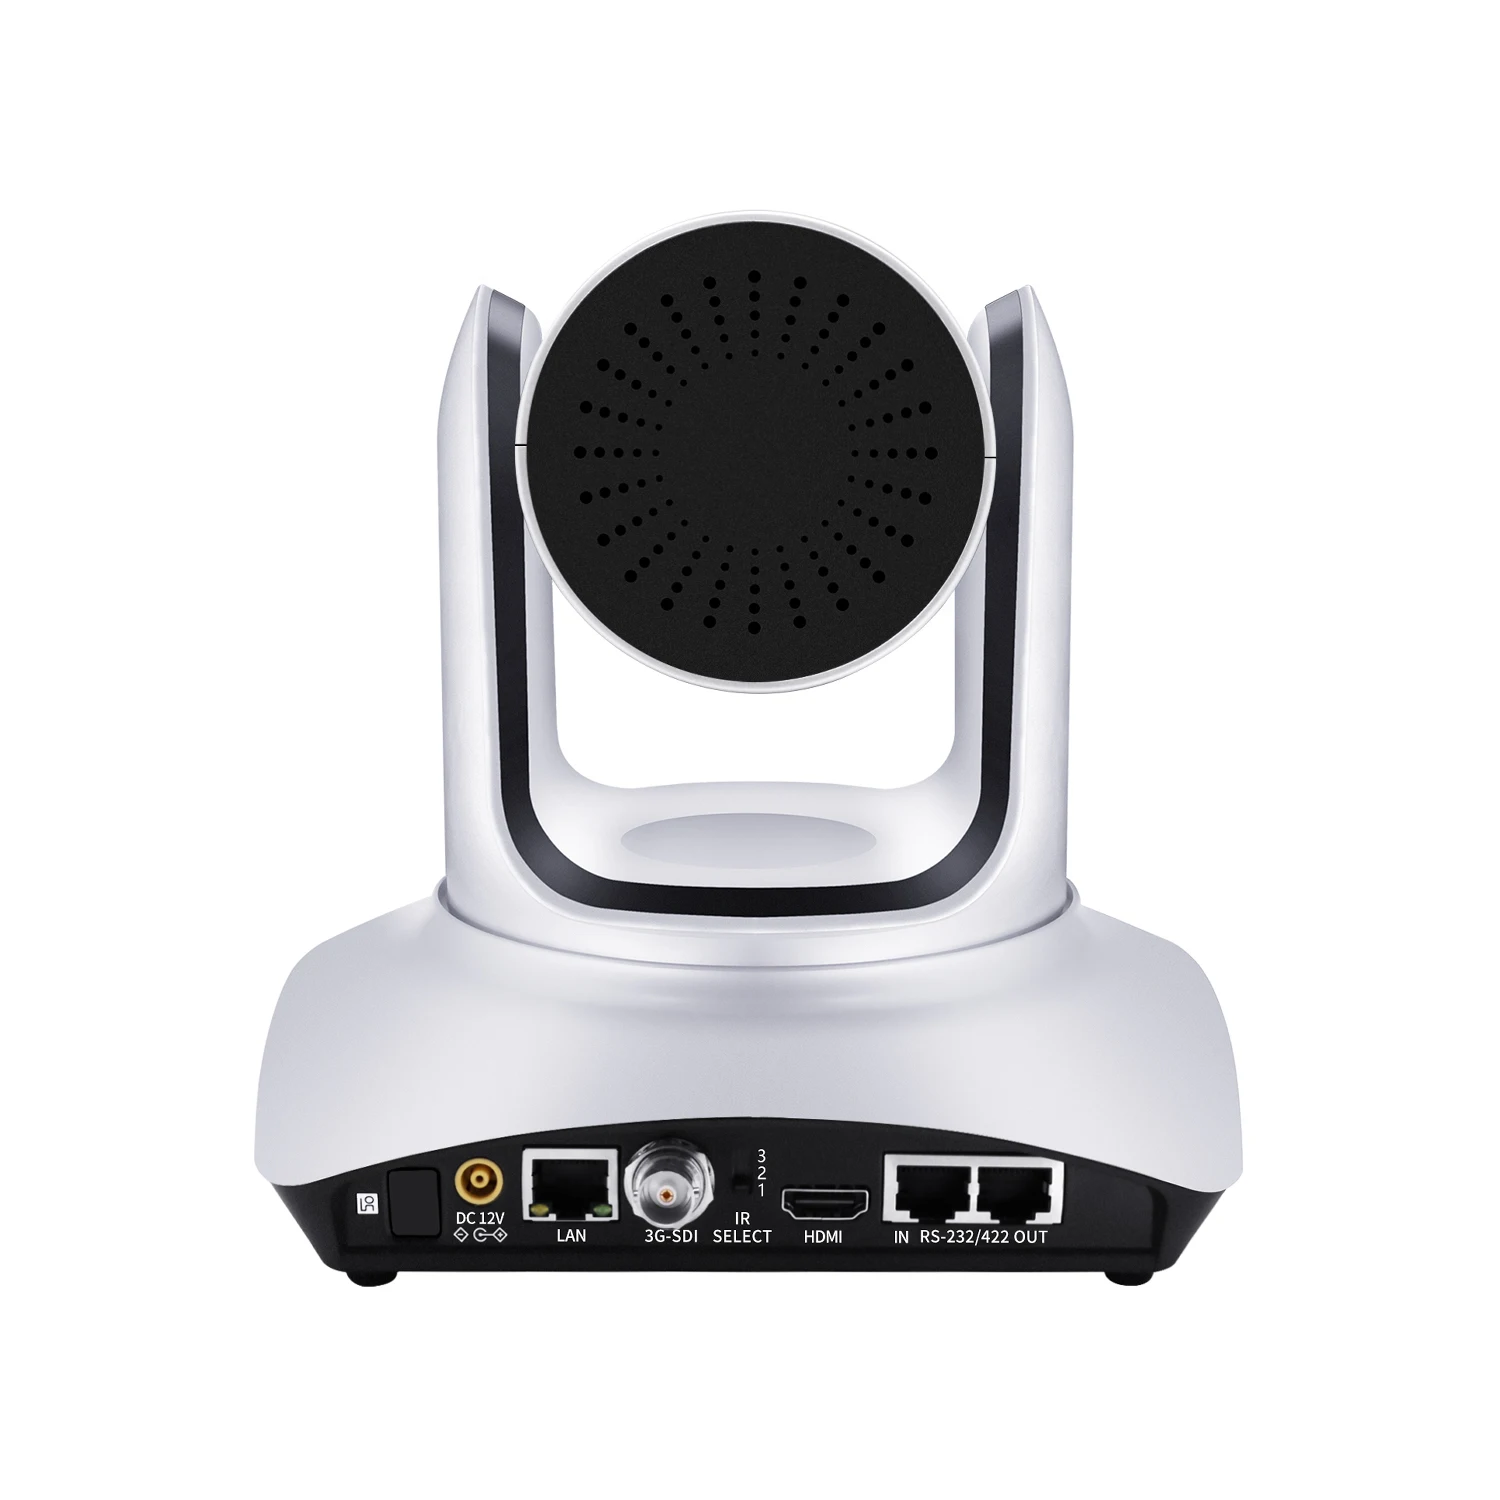 HDMI 1080P katovision robotic broadcast camera USB3.0 video conference system logitech ptz web camera